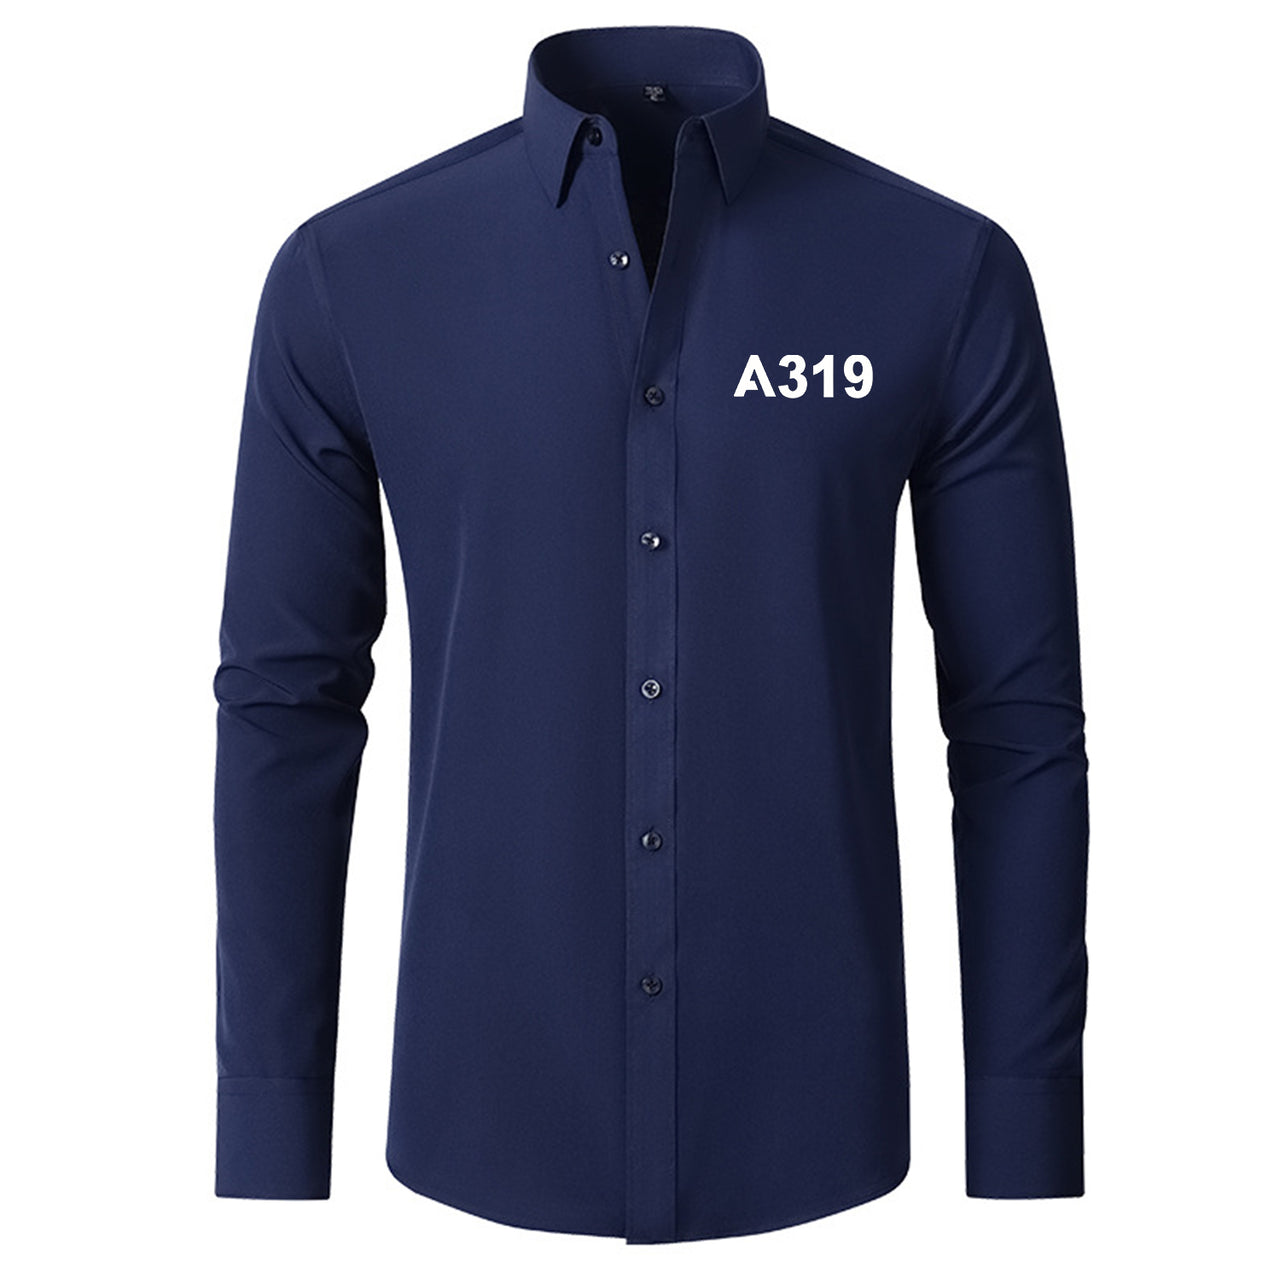 A319 Flat Text Designed Long Sleeve Shirts